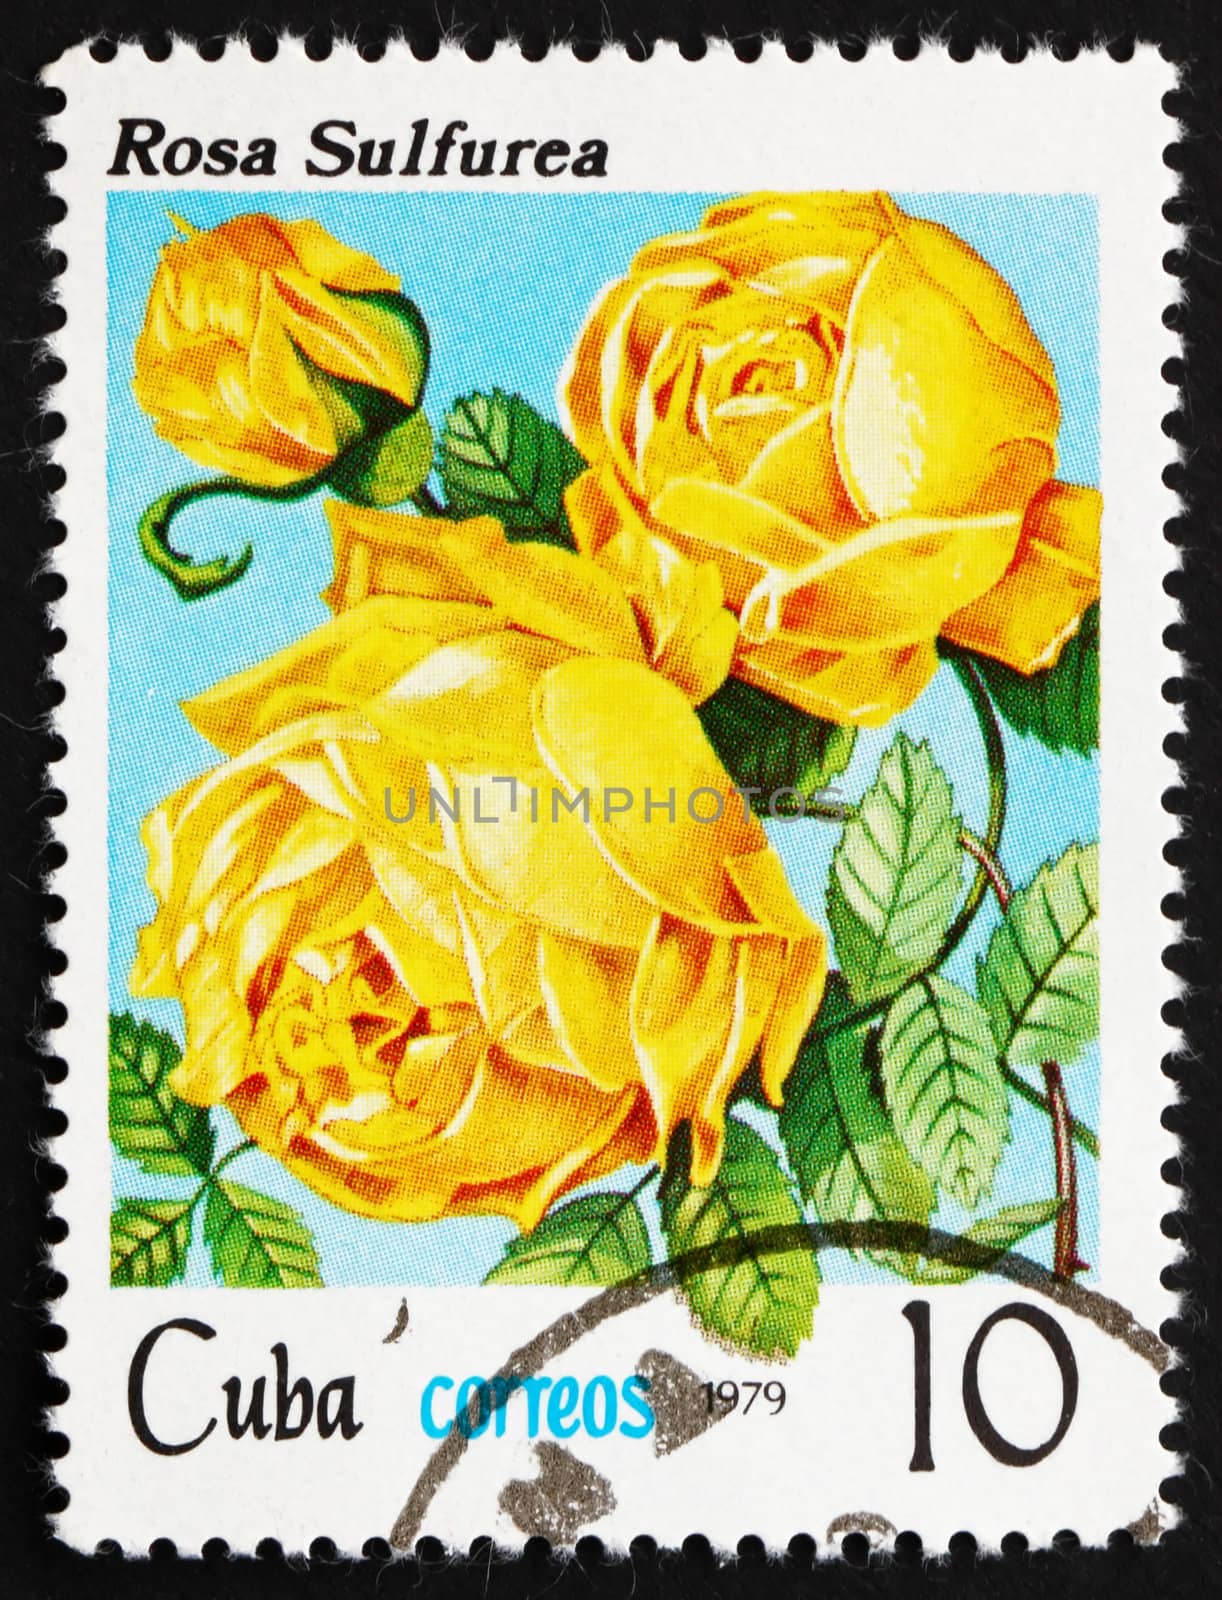 CUBA - CIRCA 1979: a stamp printed in the Cuba shows Rose, Rosa Sulfurea, circa 1979